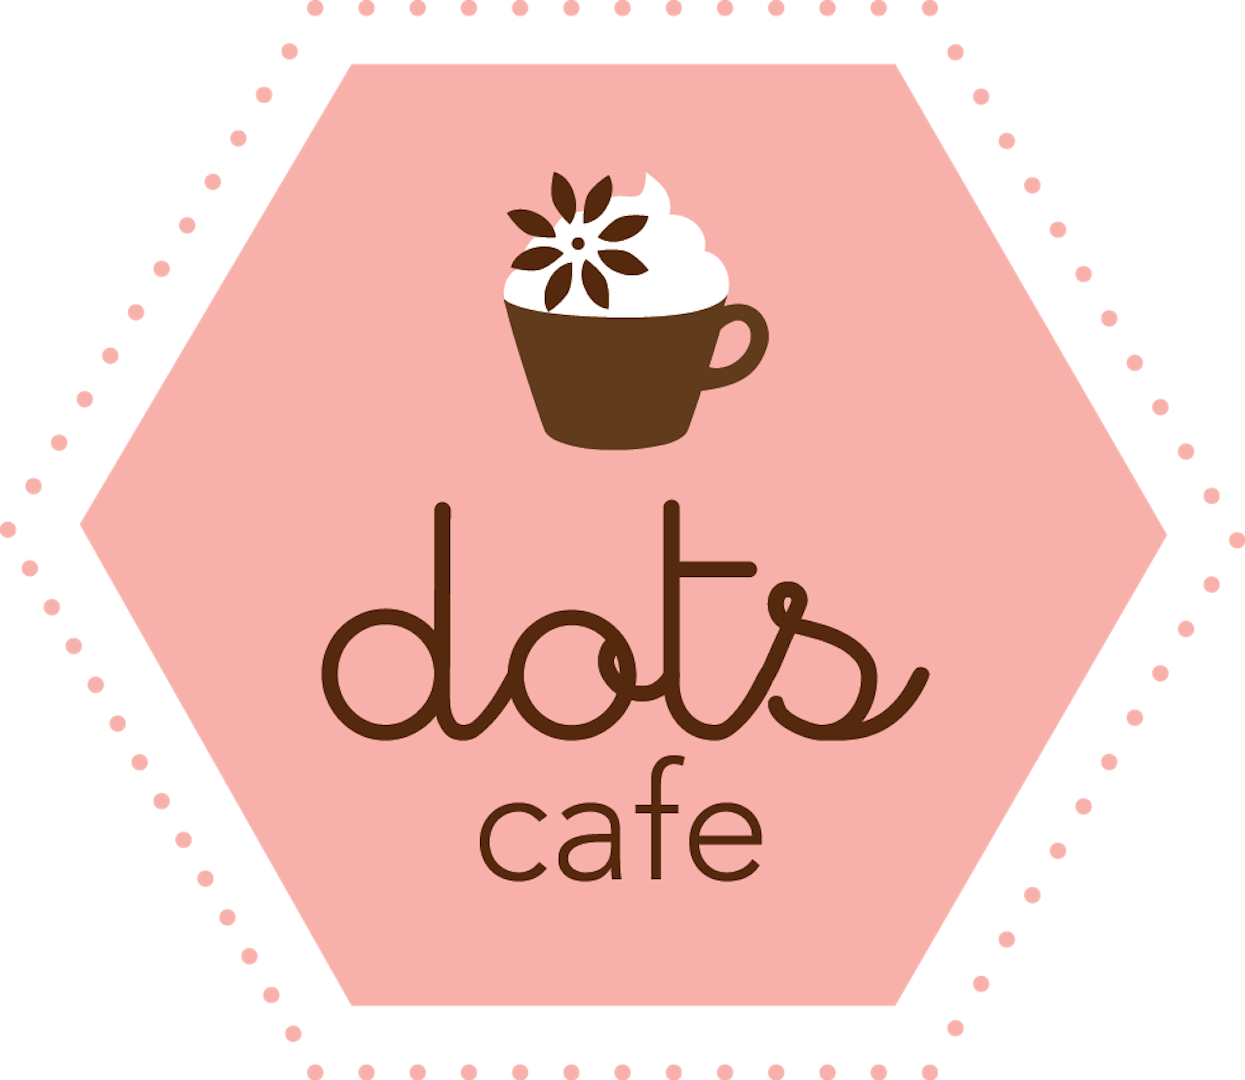 DOTS CAFE